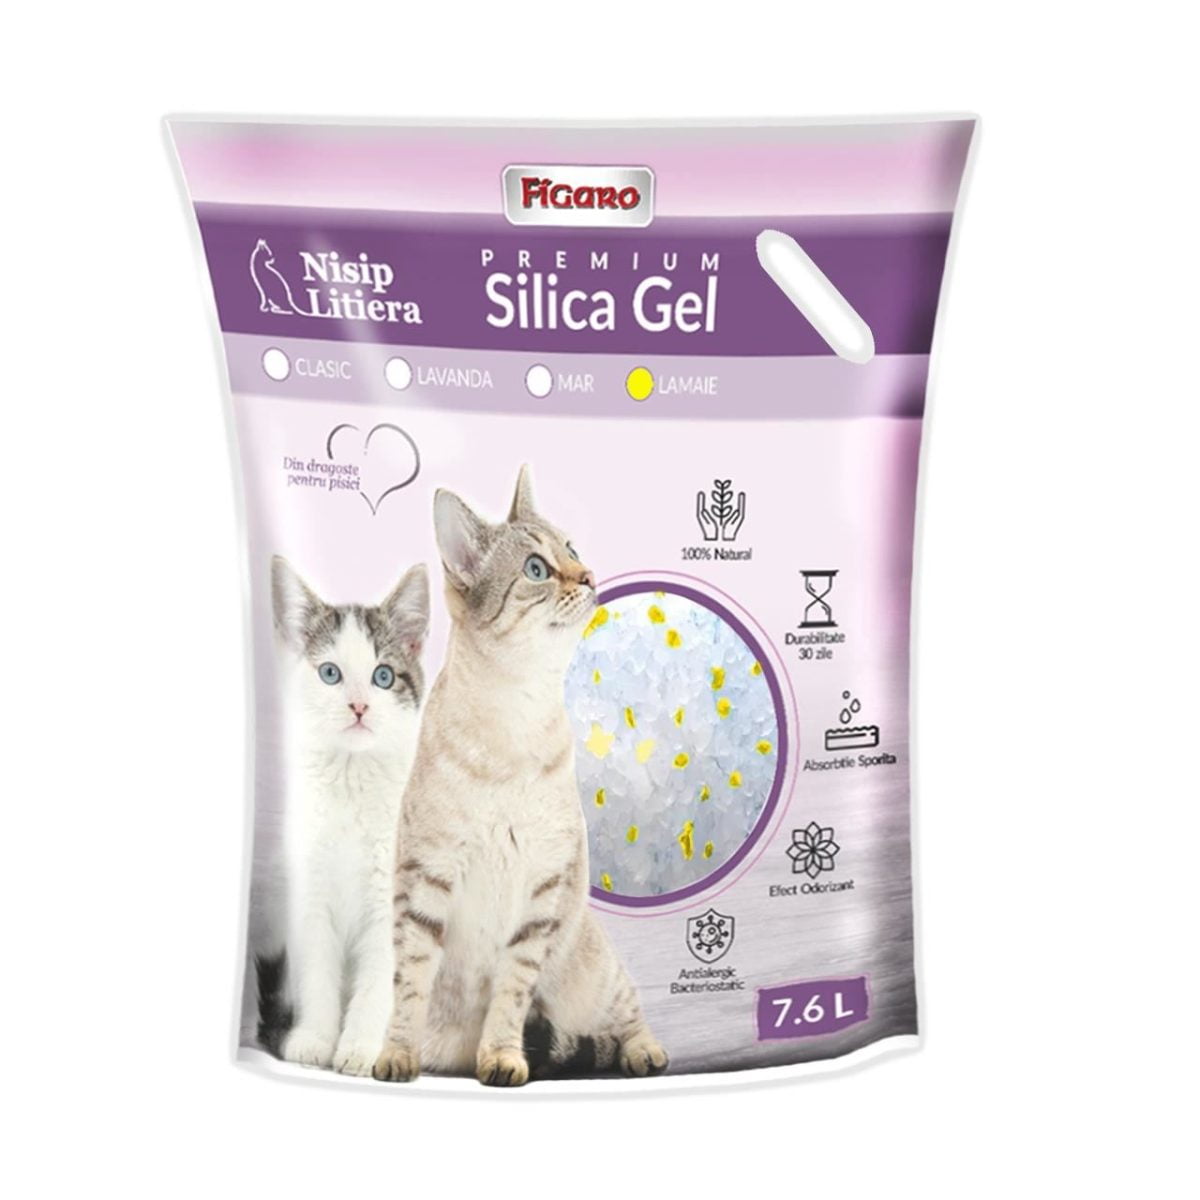 Asternut pentru litiera pisici nisip silica-gel figaro premium 7.6l-lamaie